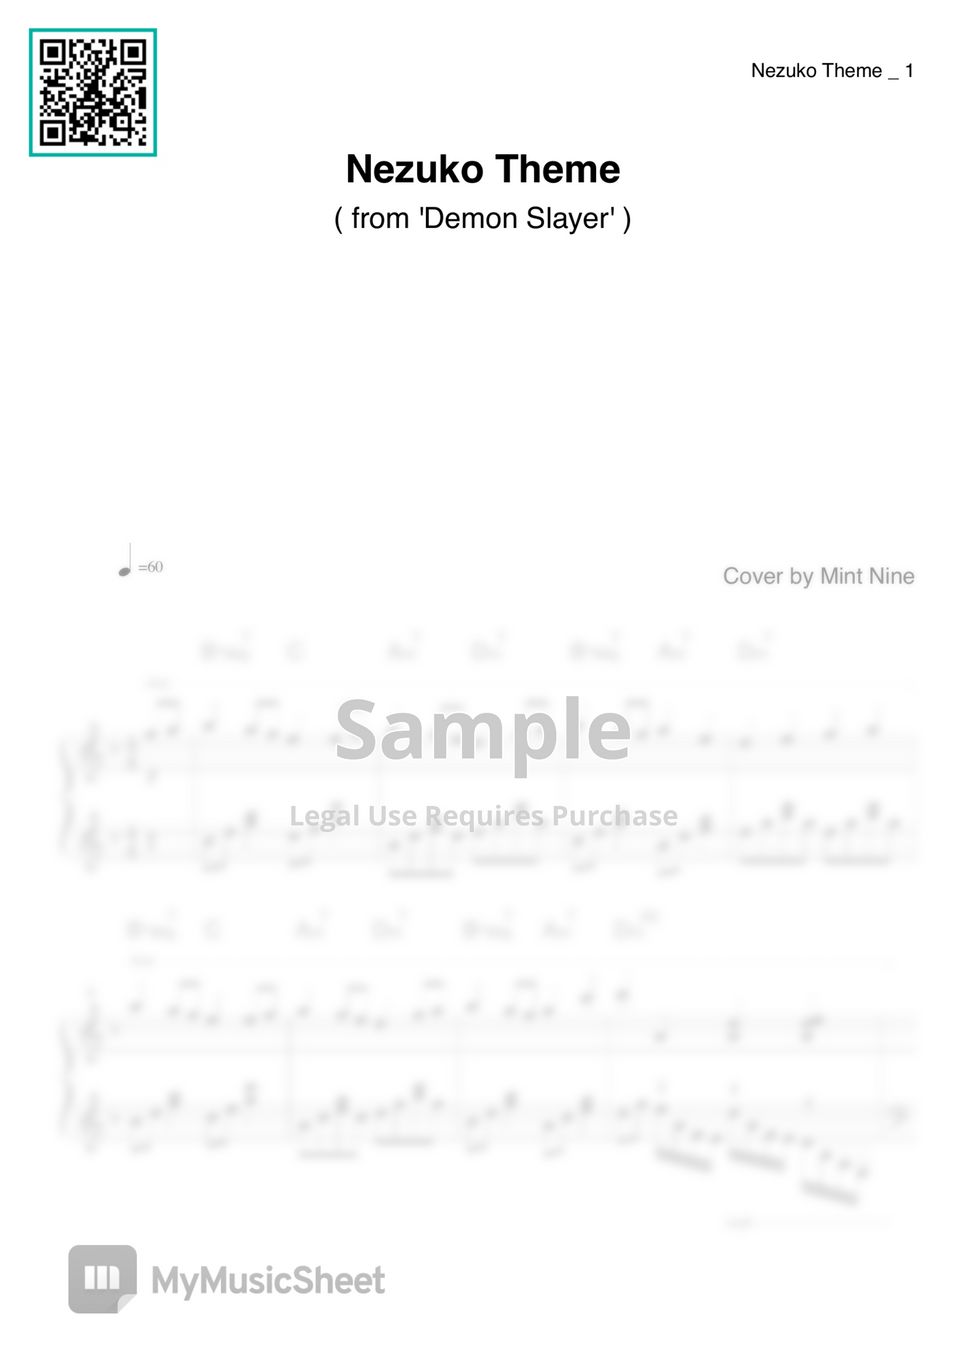 Demon Slayer OST (귀멸의 칼날 OST) - Nezuko Theme (네즈코 테마곡) by Mint Nine